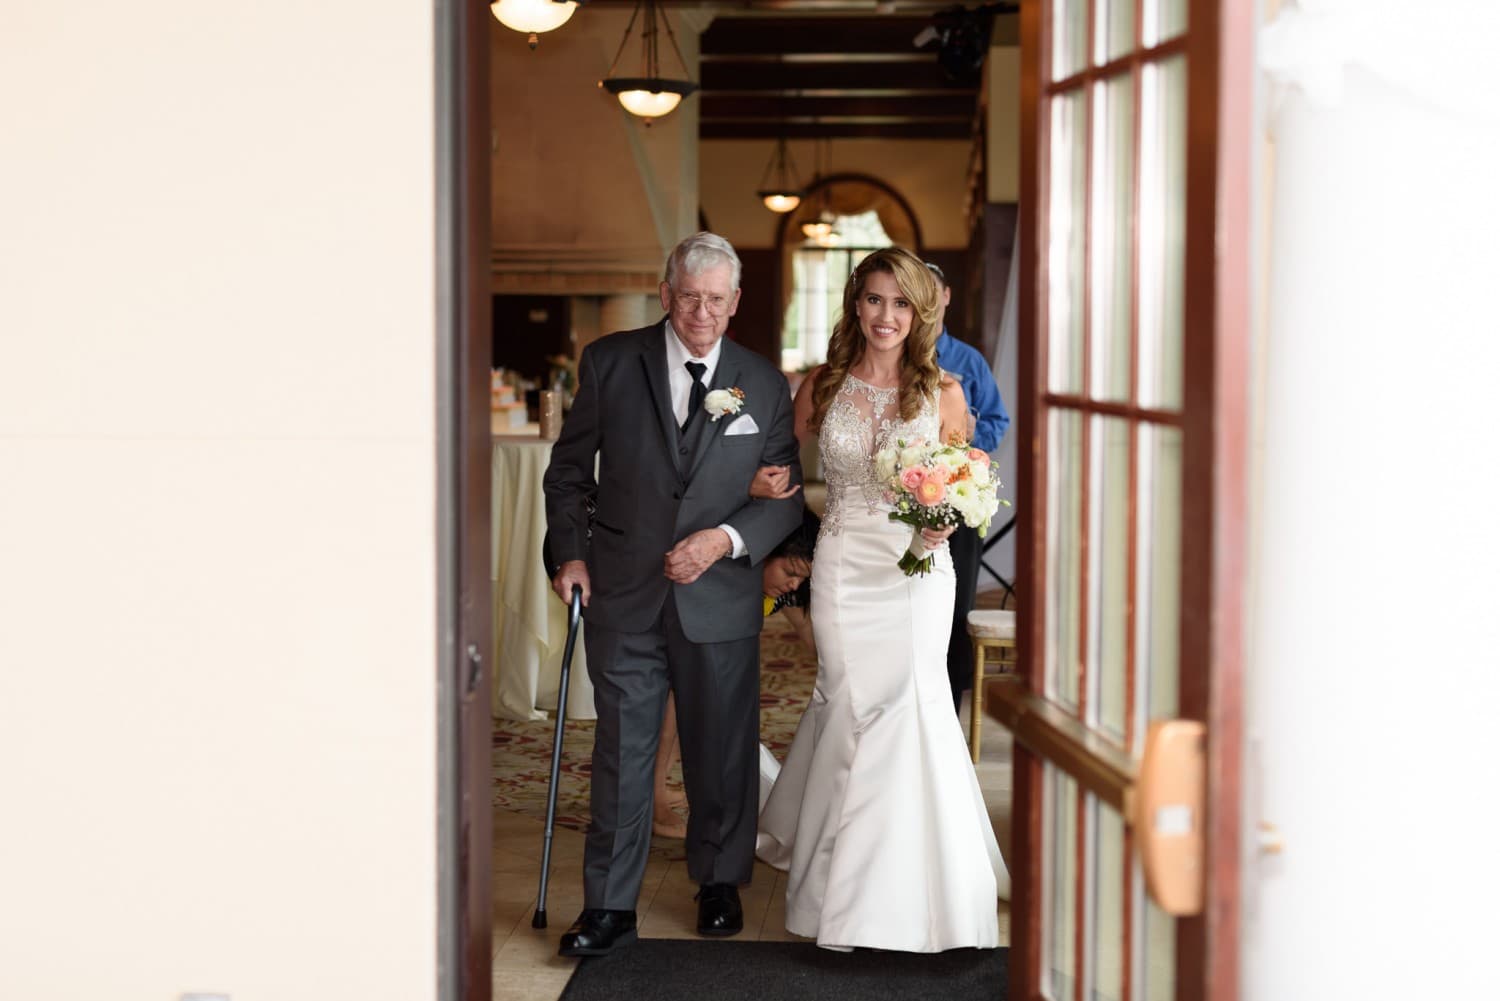 Bride with grandfather walking out of doorway - Grande Dunes Ocean Club - Myrtle Beach